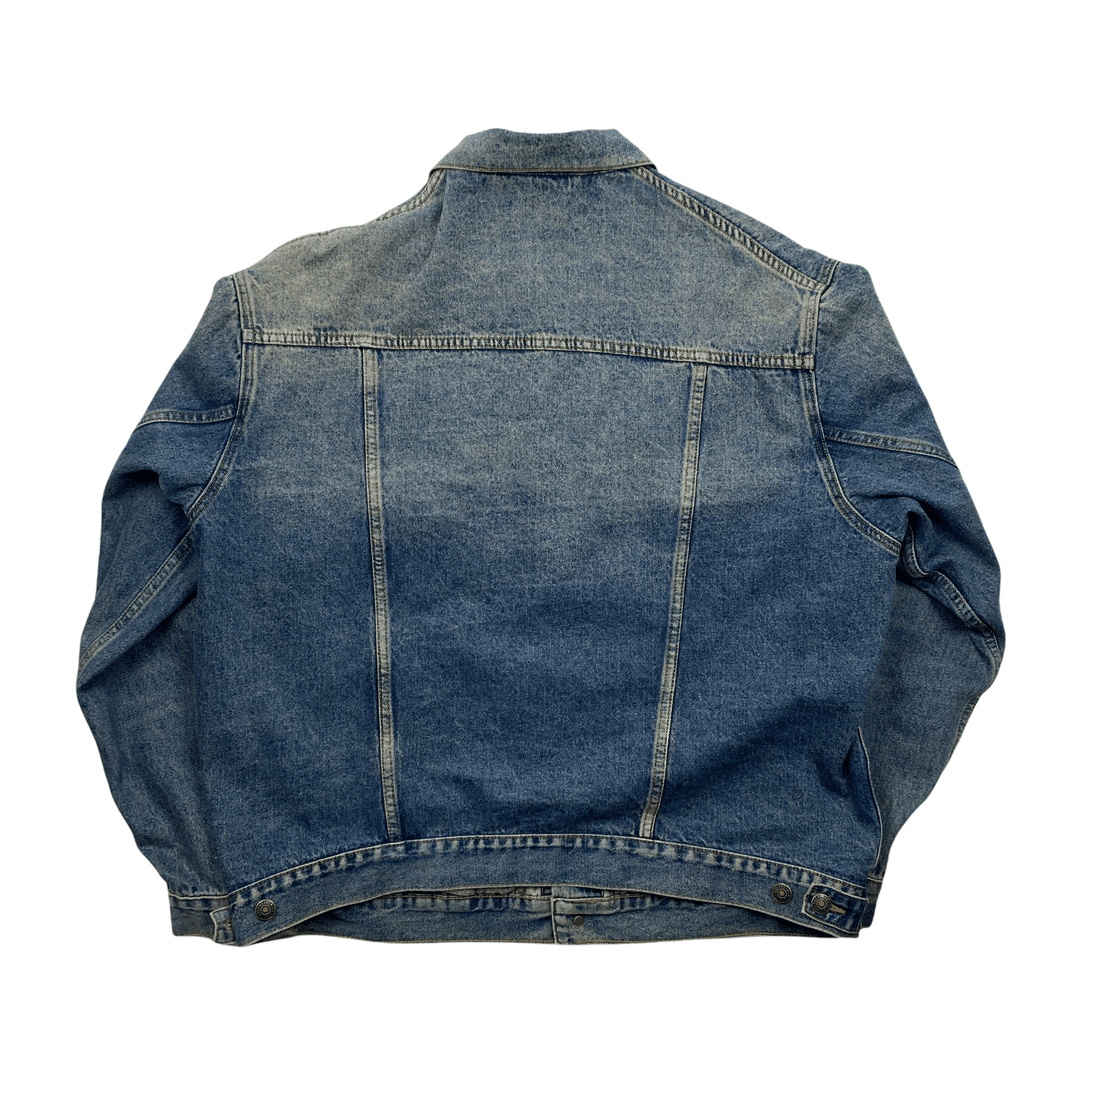 Blue Denim Balenciaga Spellout Jacket - 50 (Extra Large) - The Streetwear Studio